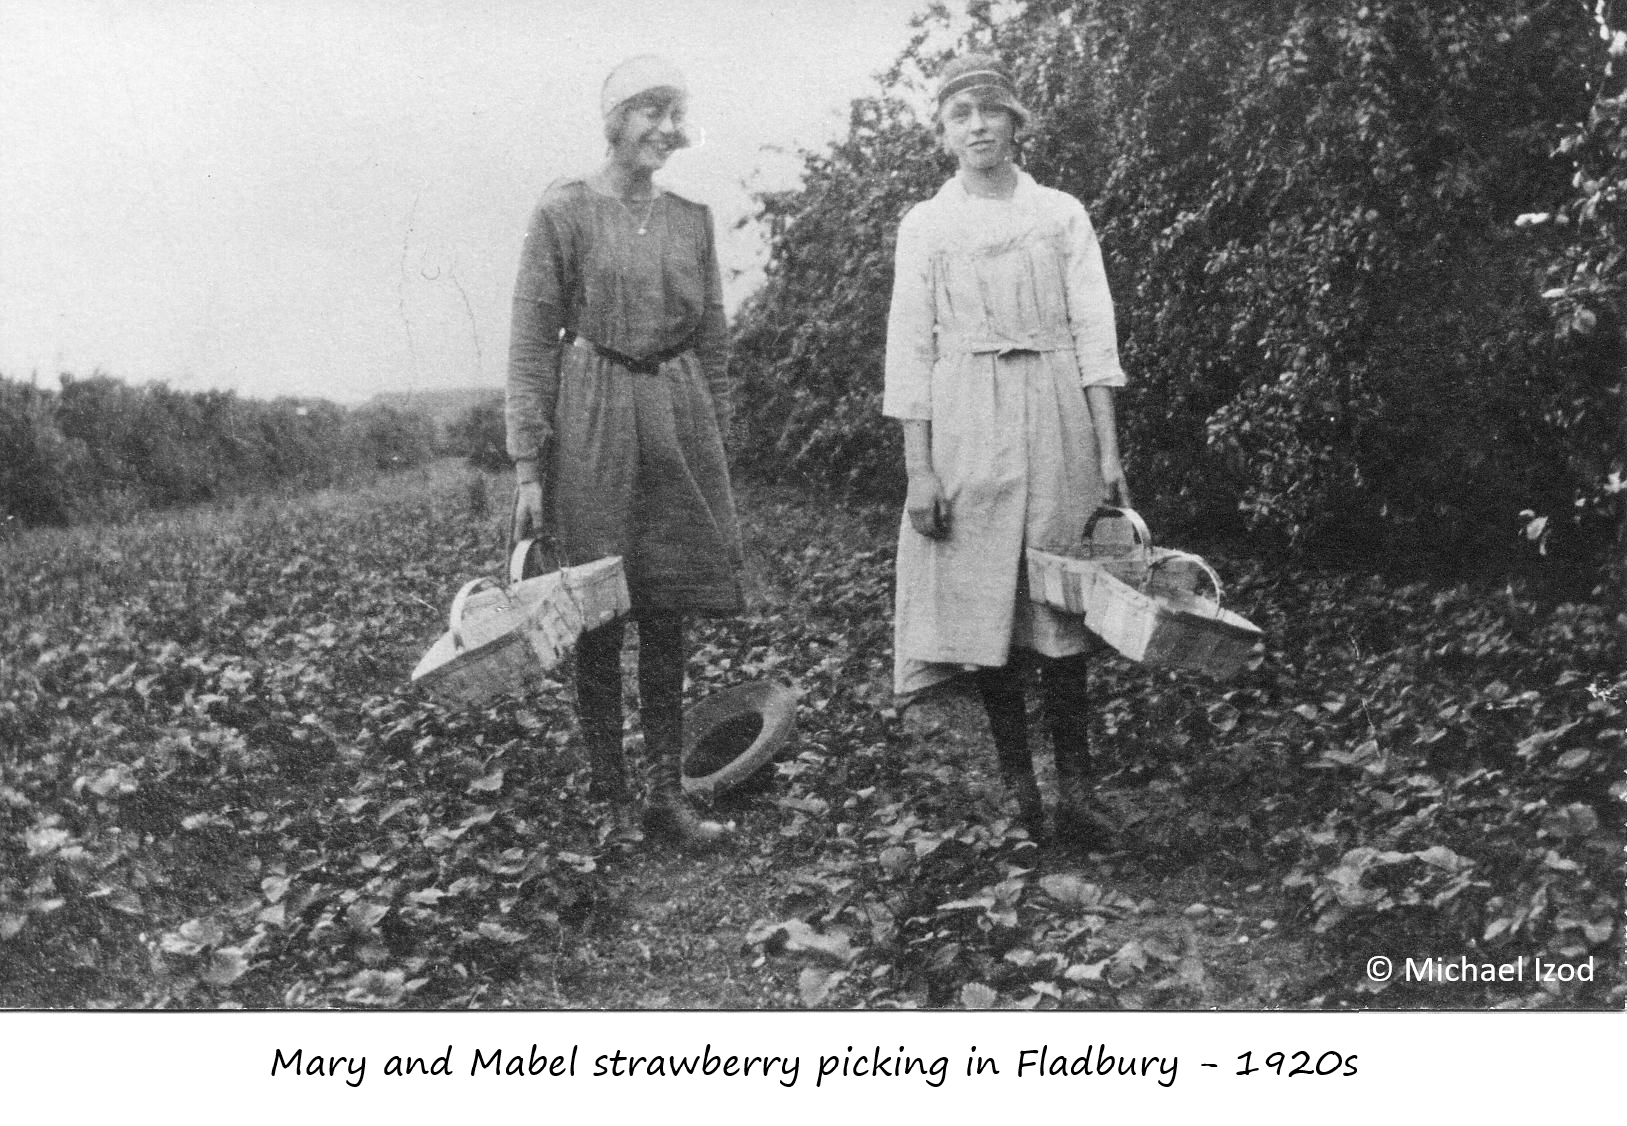 Strawberry picking - Michael Izod